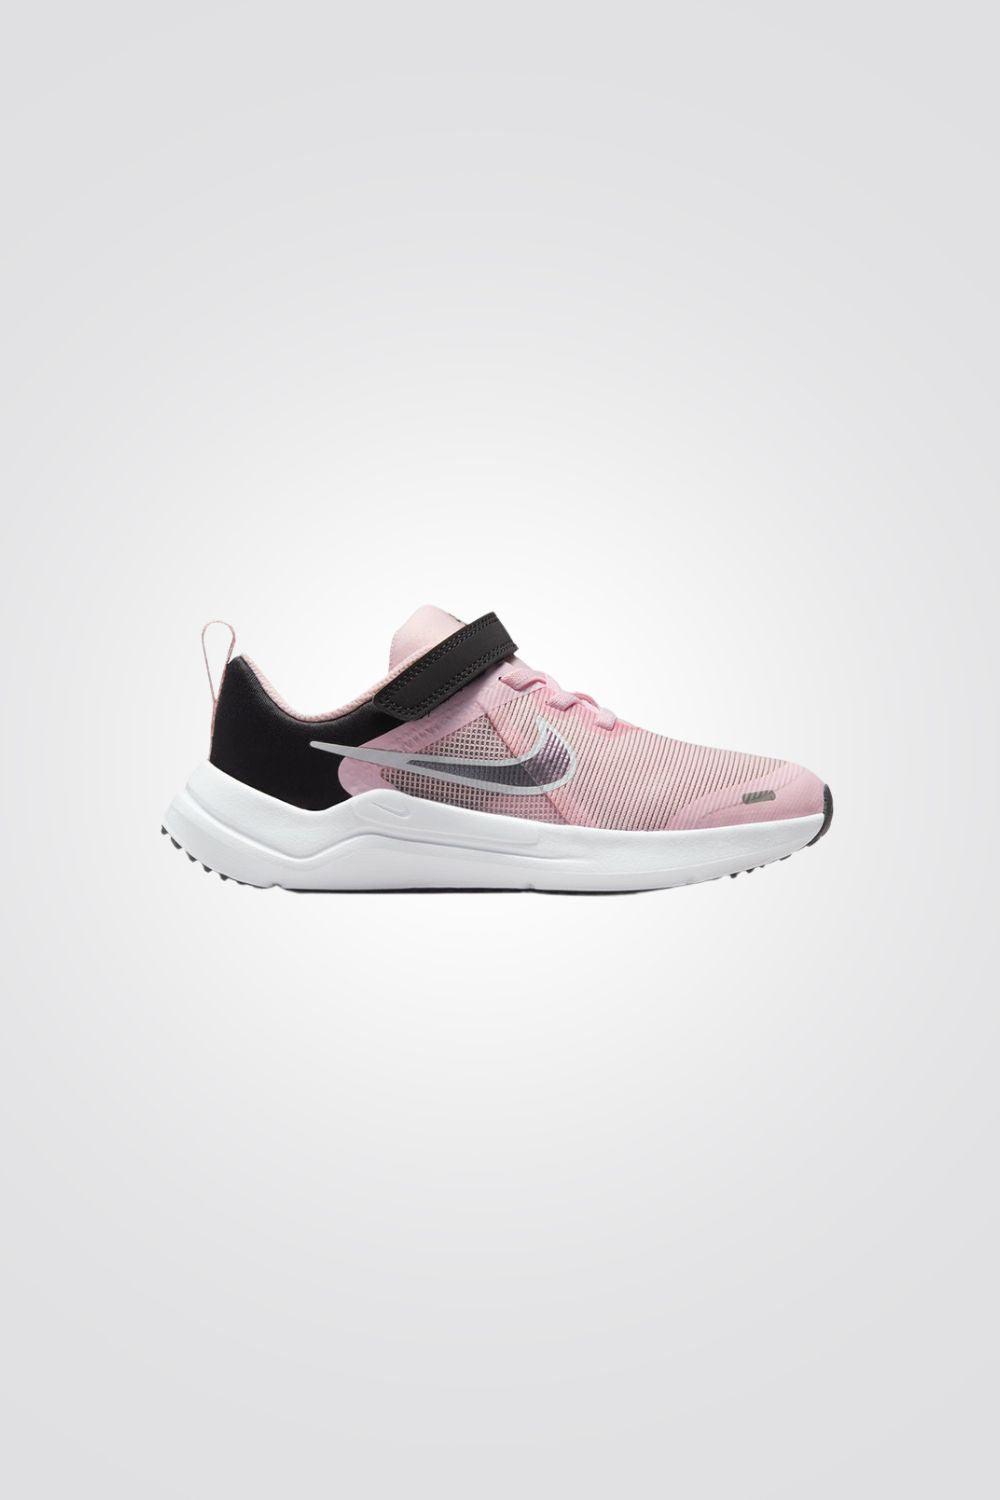 NIKE - נעלי ספורט לילדות Nike Downshifter 12 בצבע ורוד - MASHBIR//365